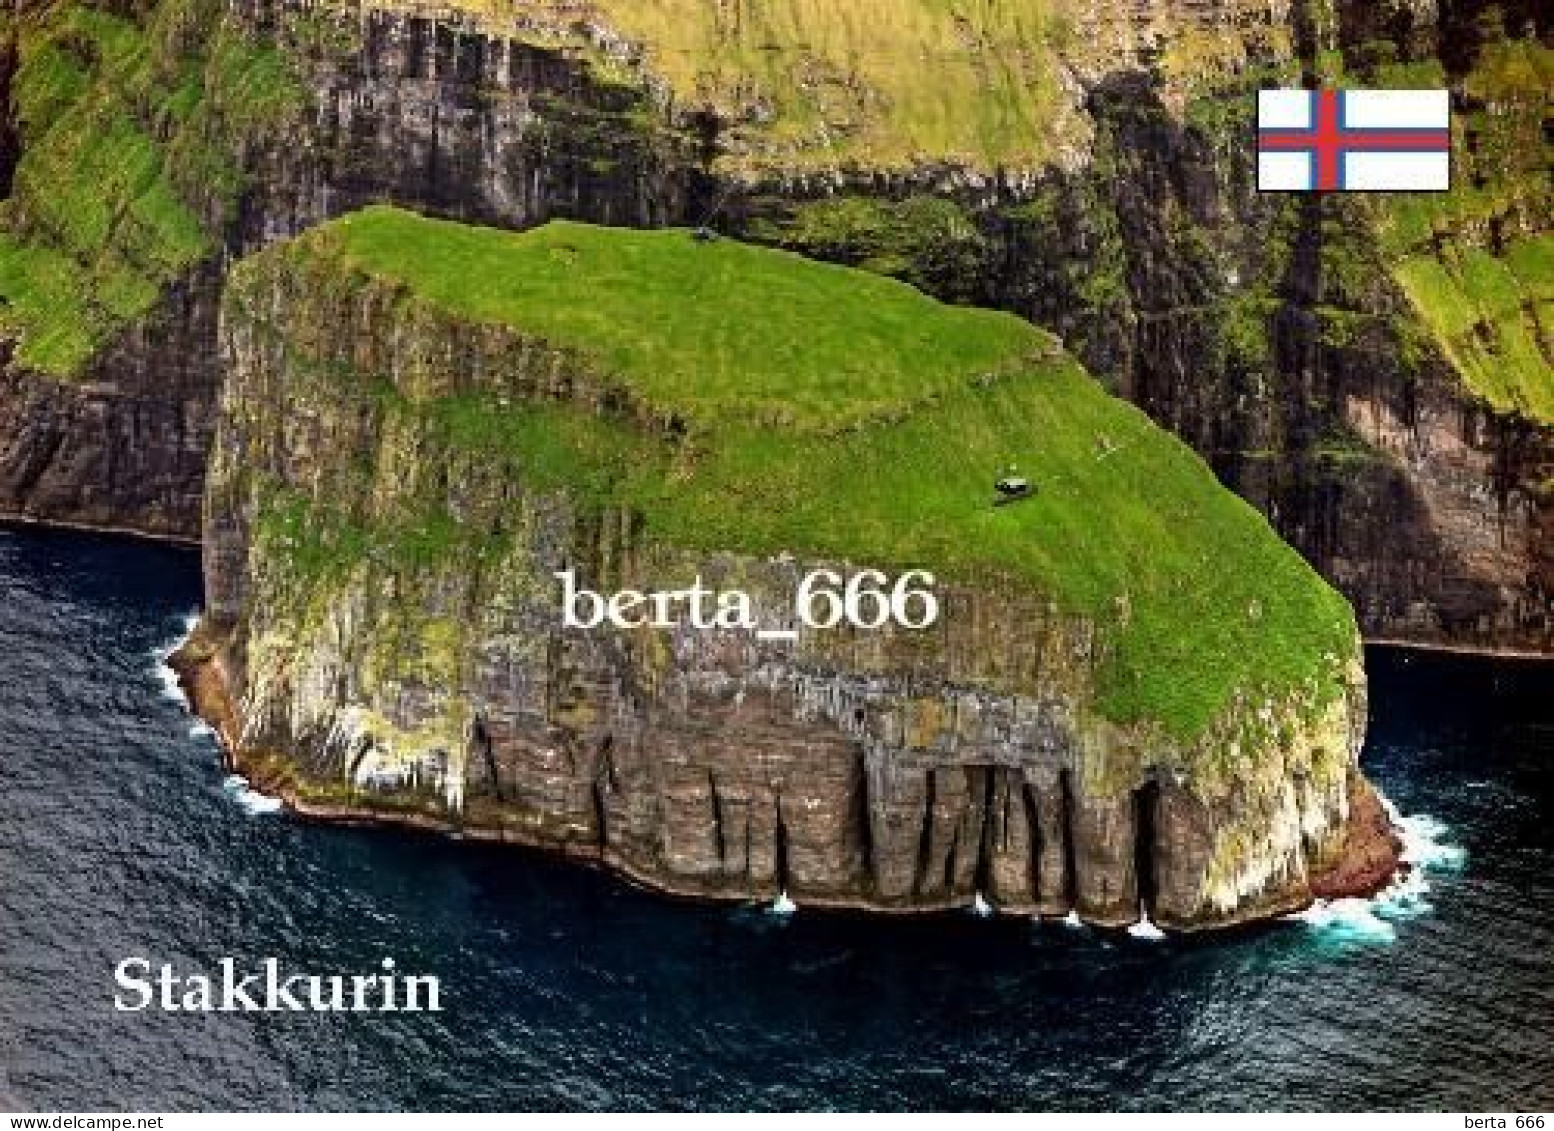 Faroe Islands Stakkurin Seastack New Postcard - Färöer